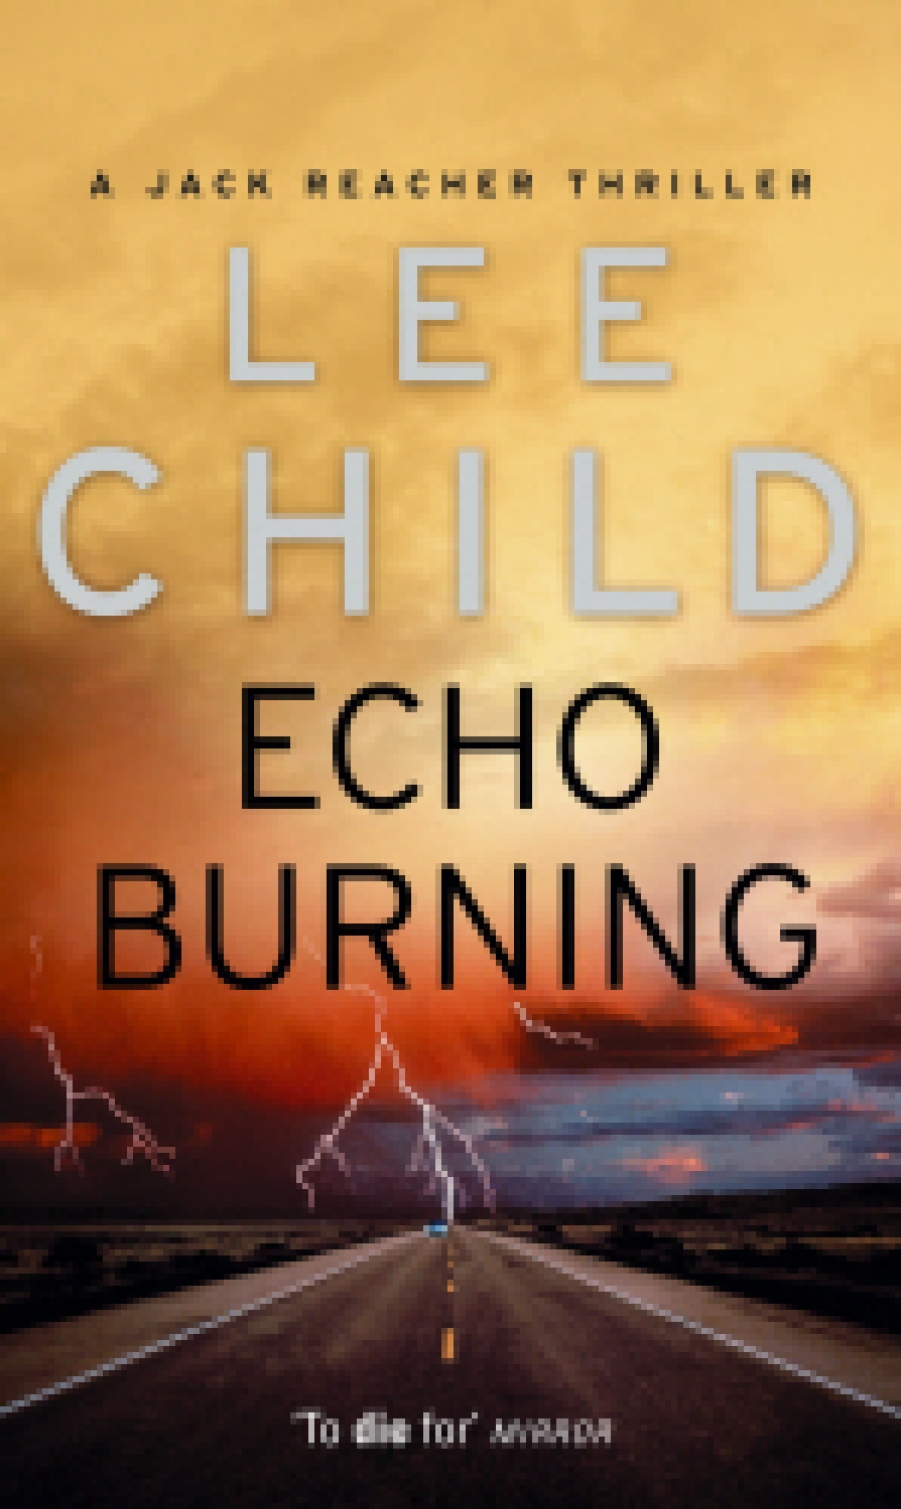 Lee, Child Echo Burning  (A) 